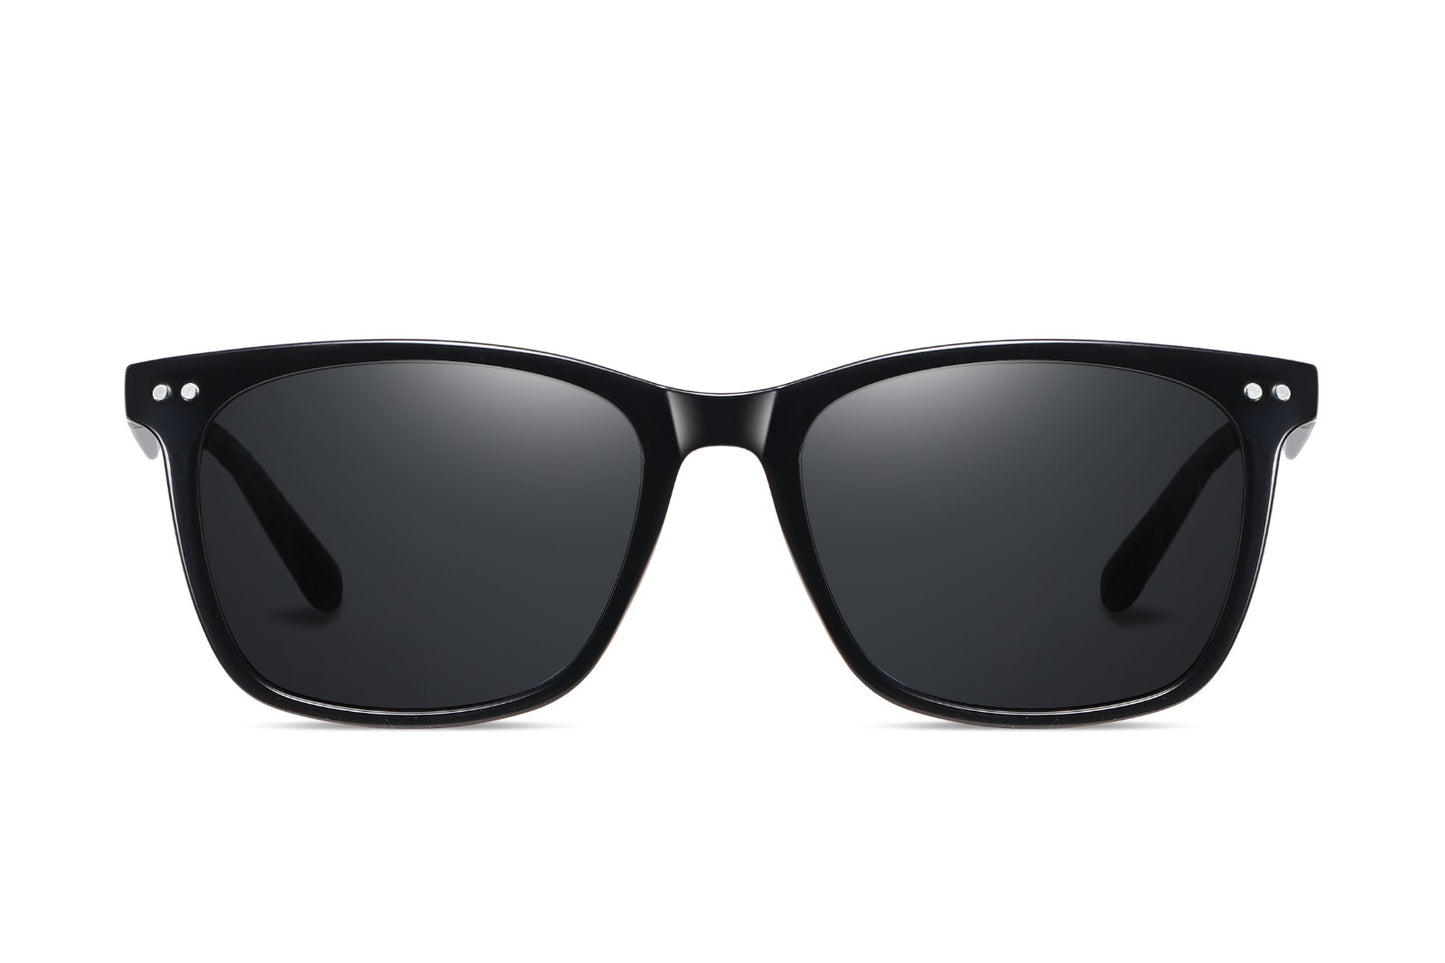 DON JOHN Sunglasses Or Prescription Glasses 105 Styles Unisex